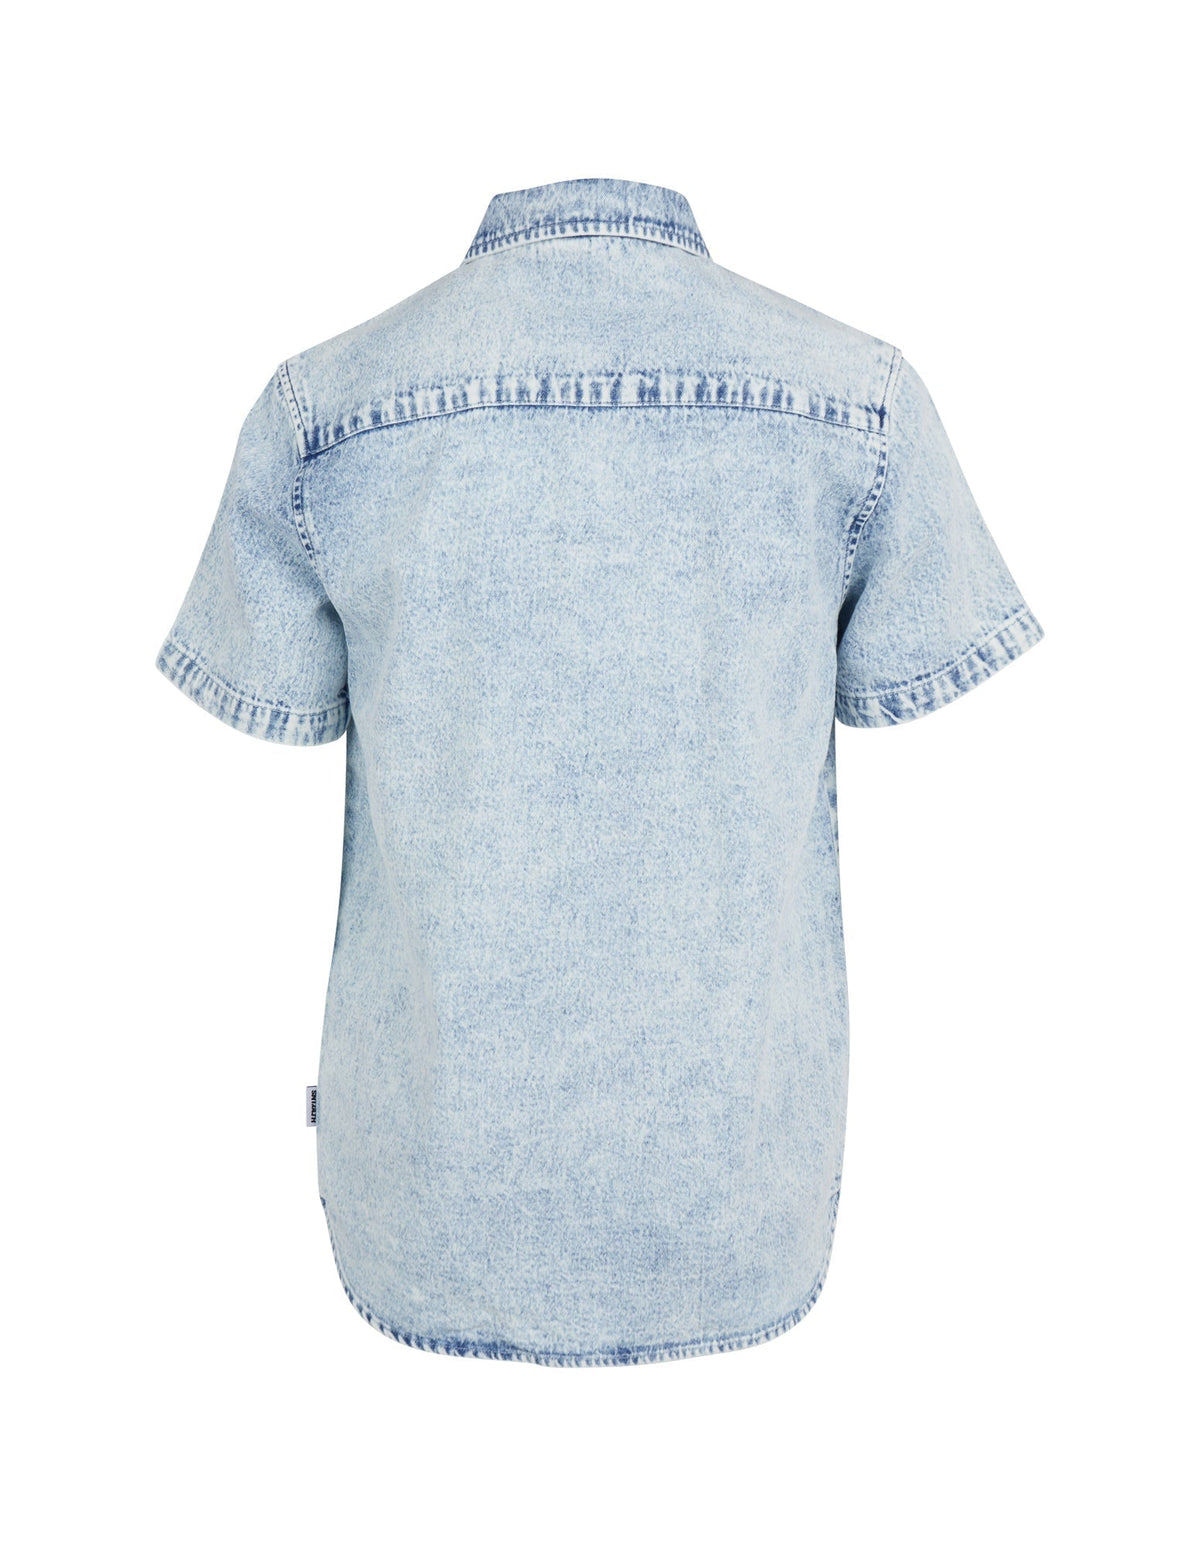 St Goliath 8-16-Prize Shirt Light Blue-Edge Clothing